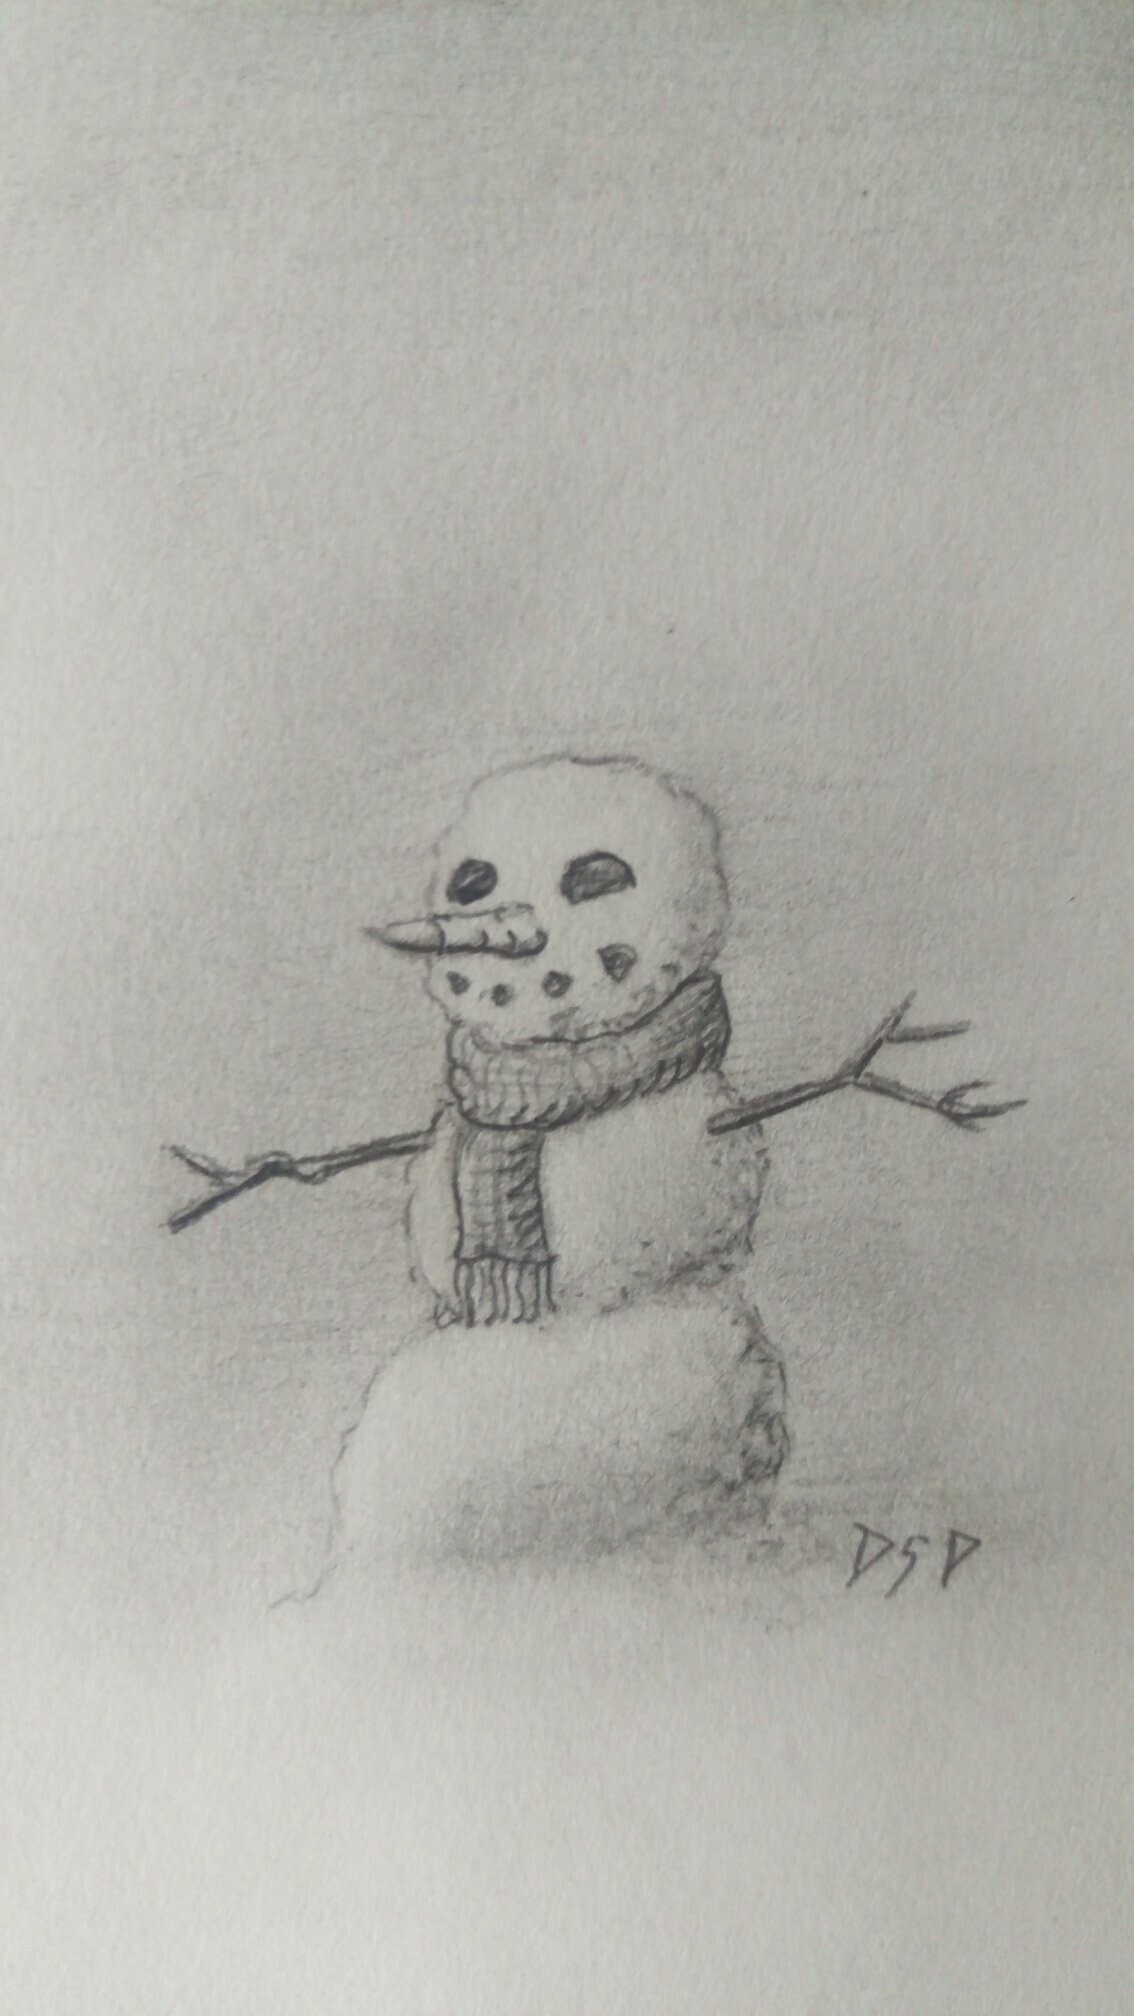 Derek S. Prijatelj - A Happy Snowman Sketch